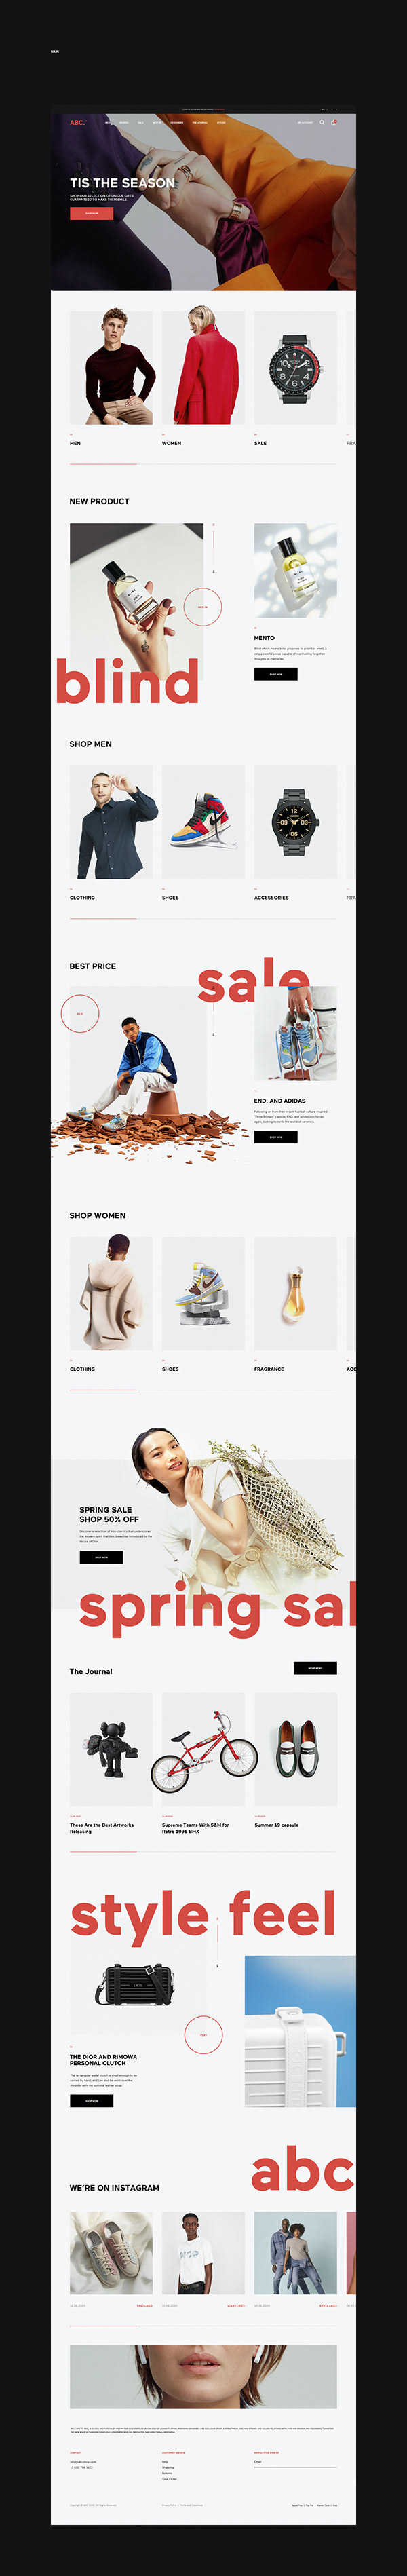 eCommerce: UX/UI design for multi-brand online store